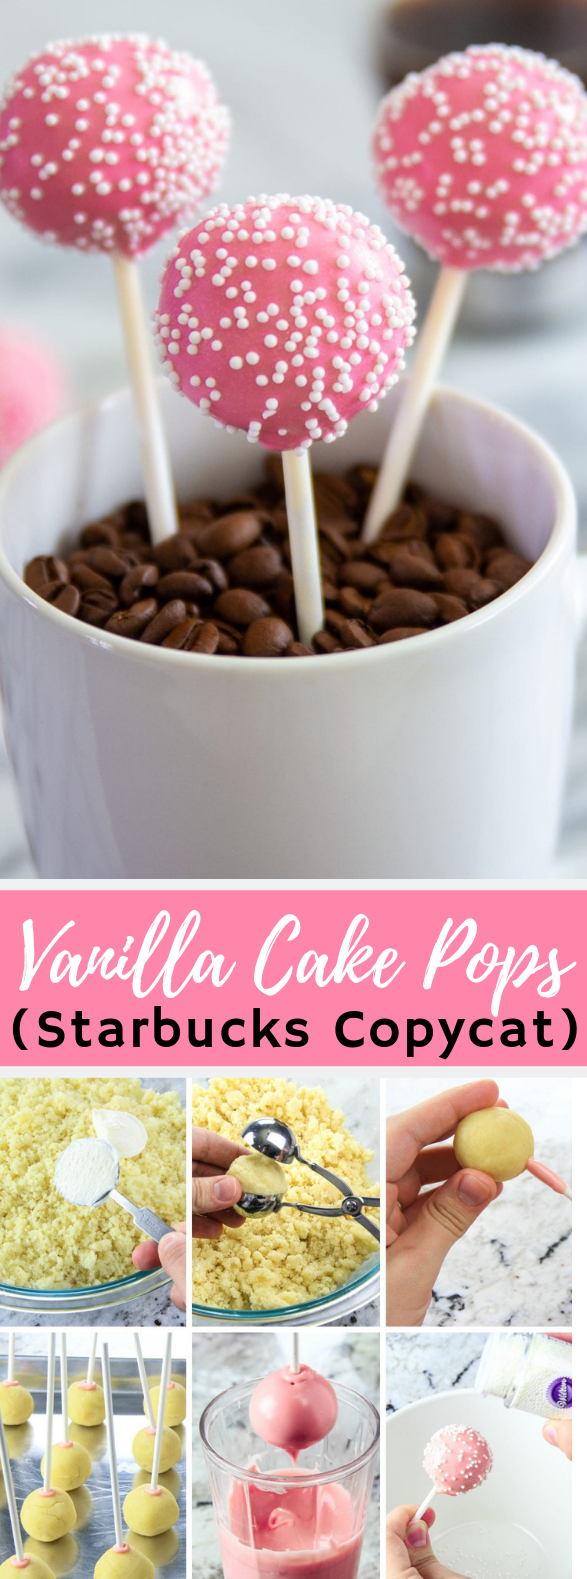 How to Make Cake Pops- Starbucks Copycat #desserts #candy